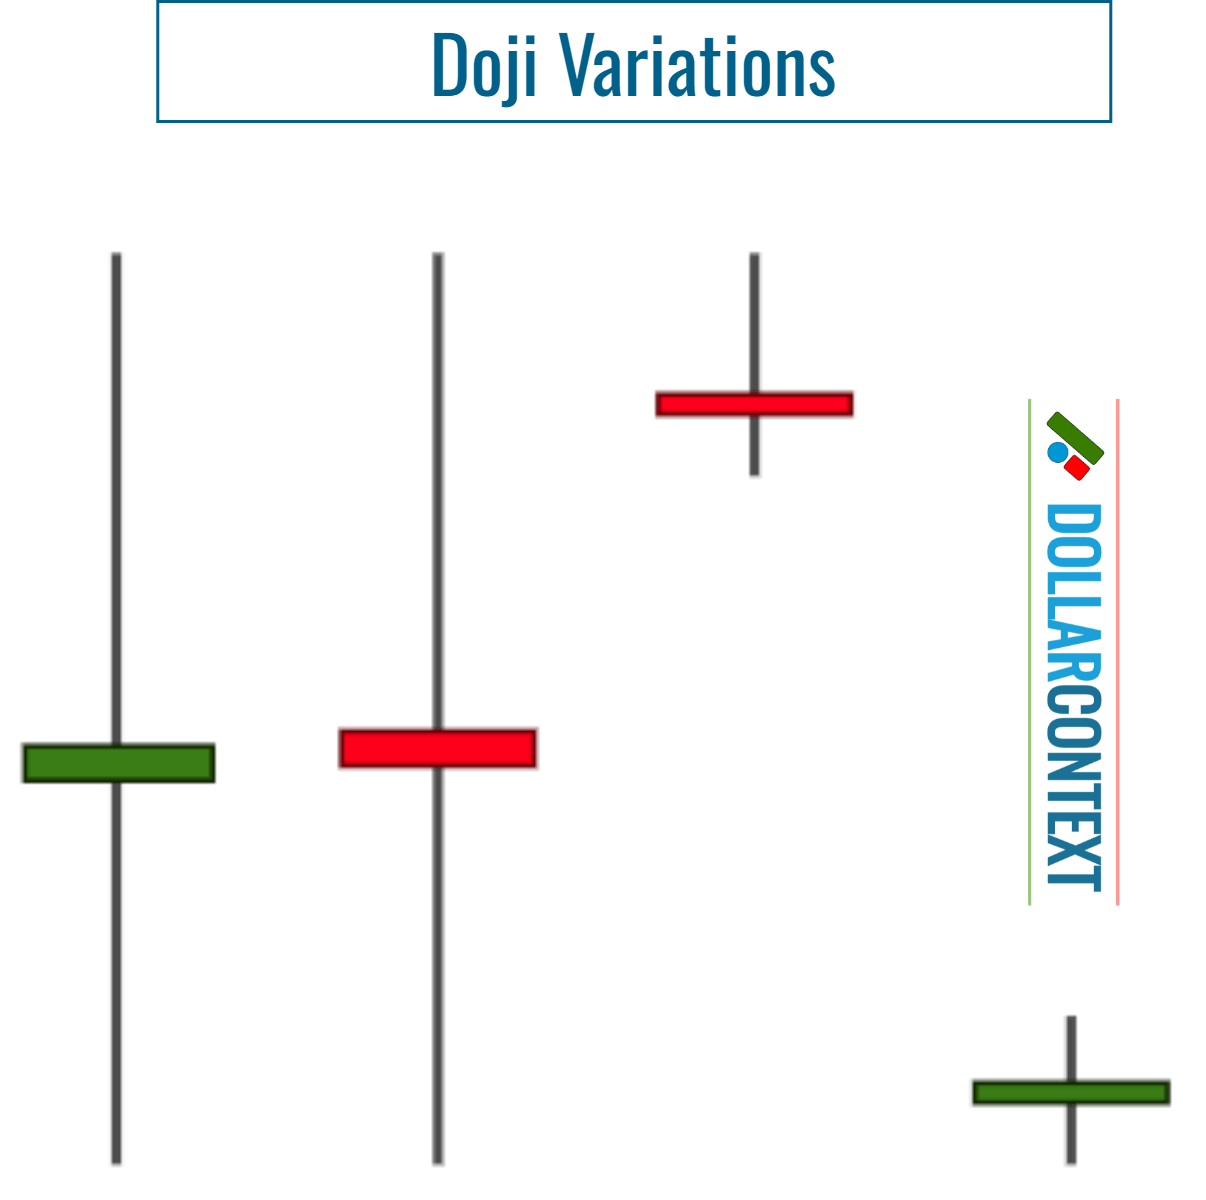 Examples of Doji Variations